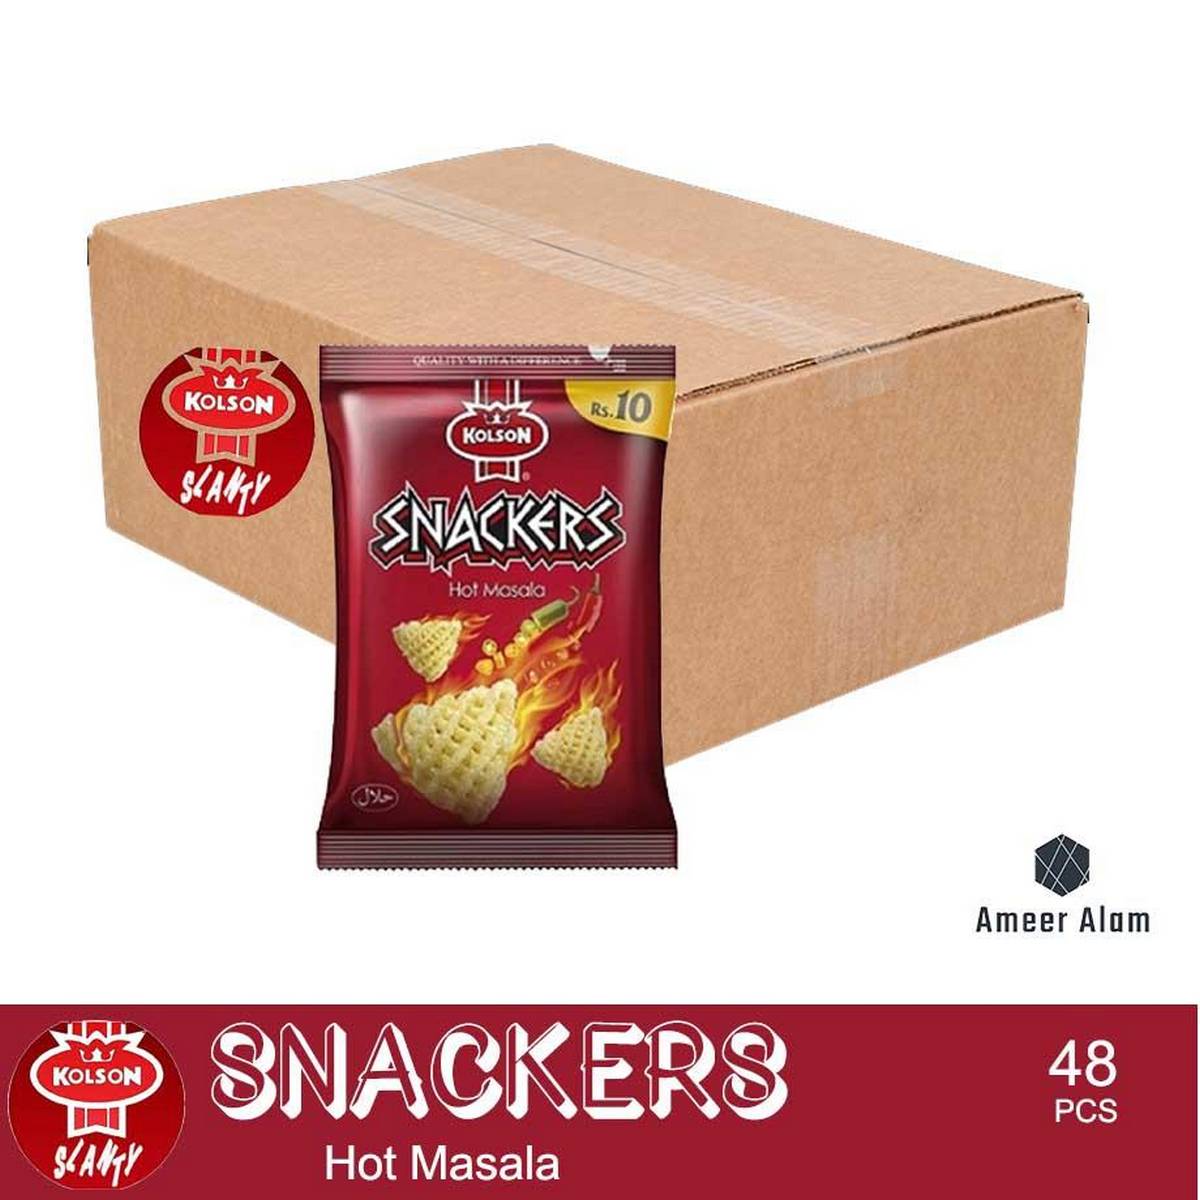 Snackers Hot Masala - 18g - 48pcs